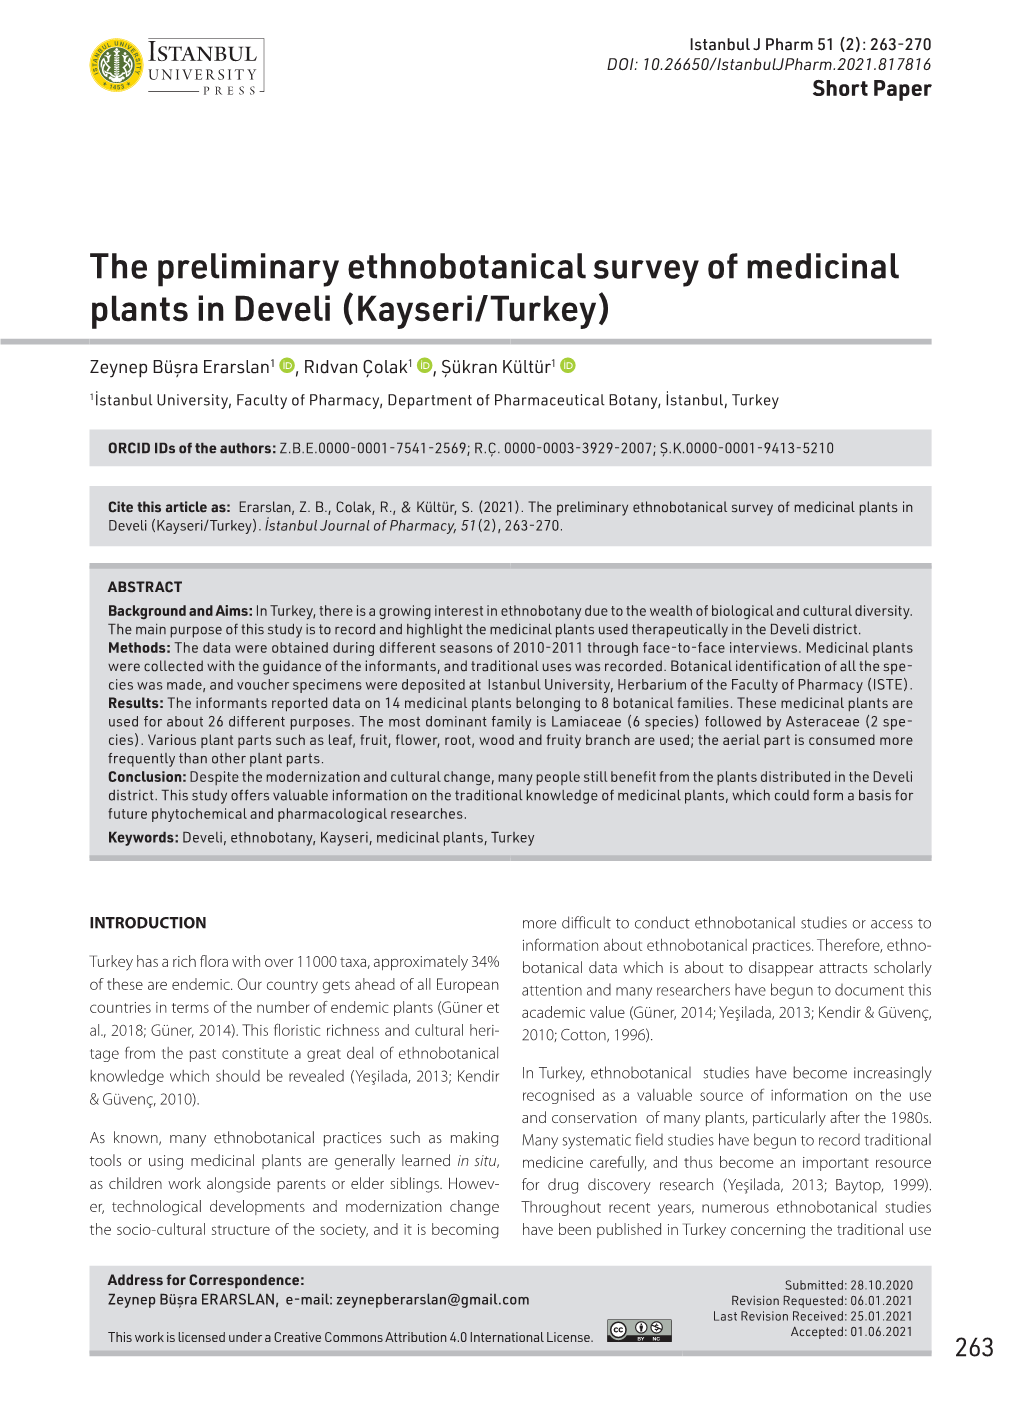 The Preliminary Ethnobotanical Survey of Medicinal Plants in Develi (Kayseri/Turkey)